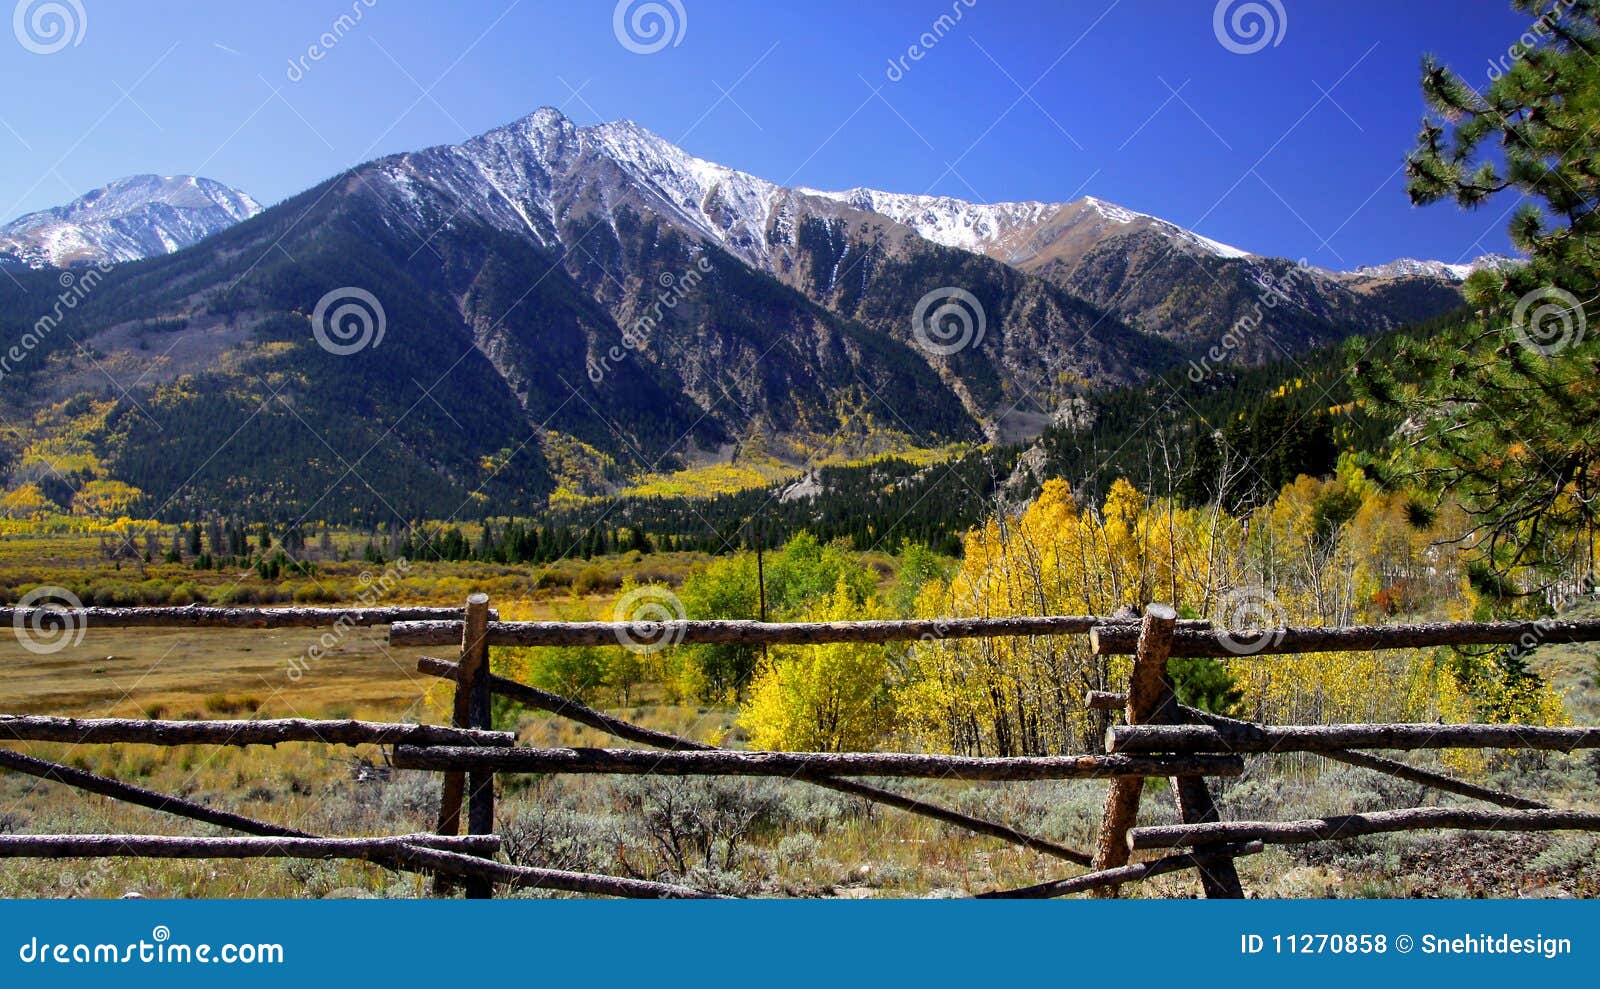 Scenic autumn landscape in Rocky mountains of Colorado.